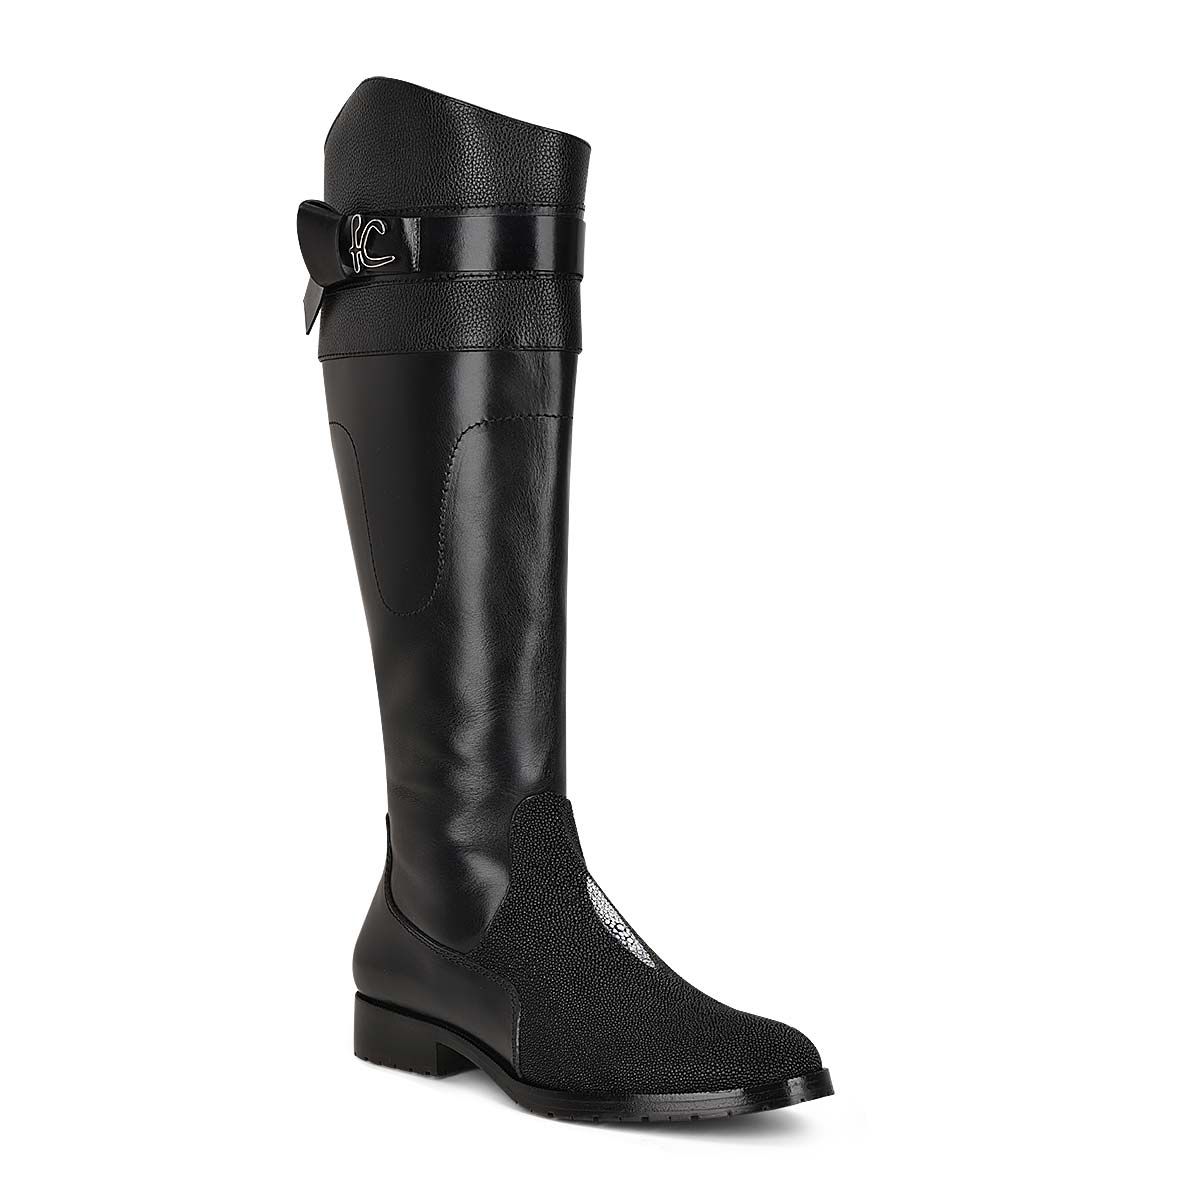 98TMTTS - Franco Cuadra black casual stingray leather riding boots for women-Kuet.us